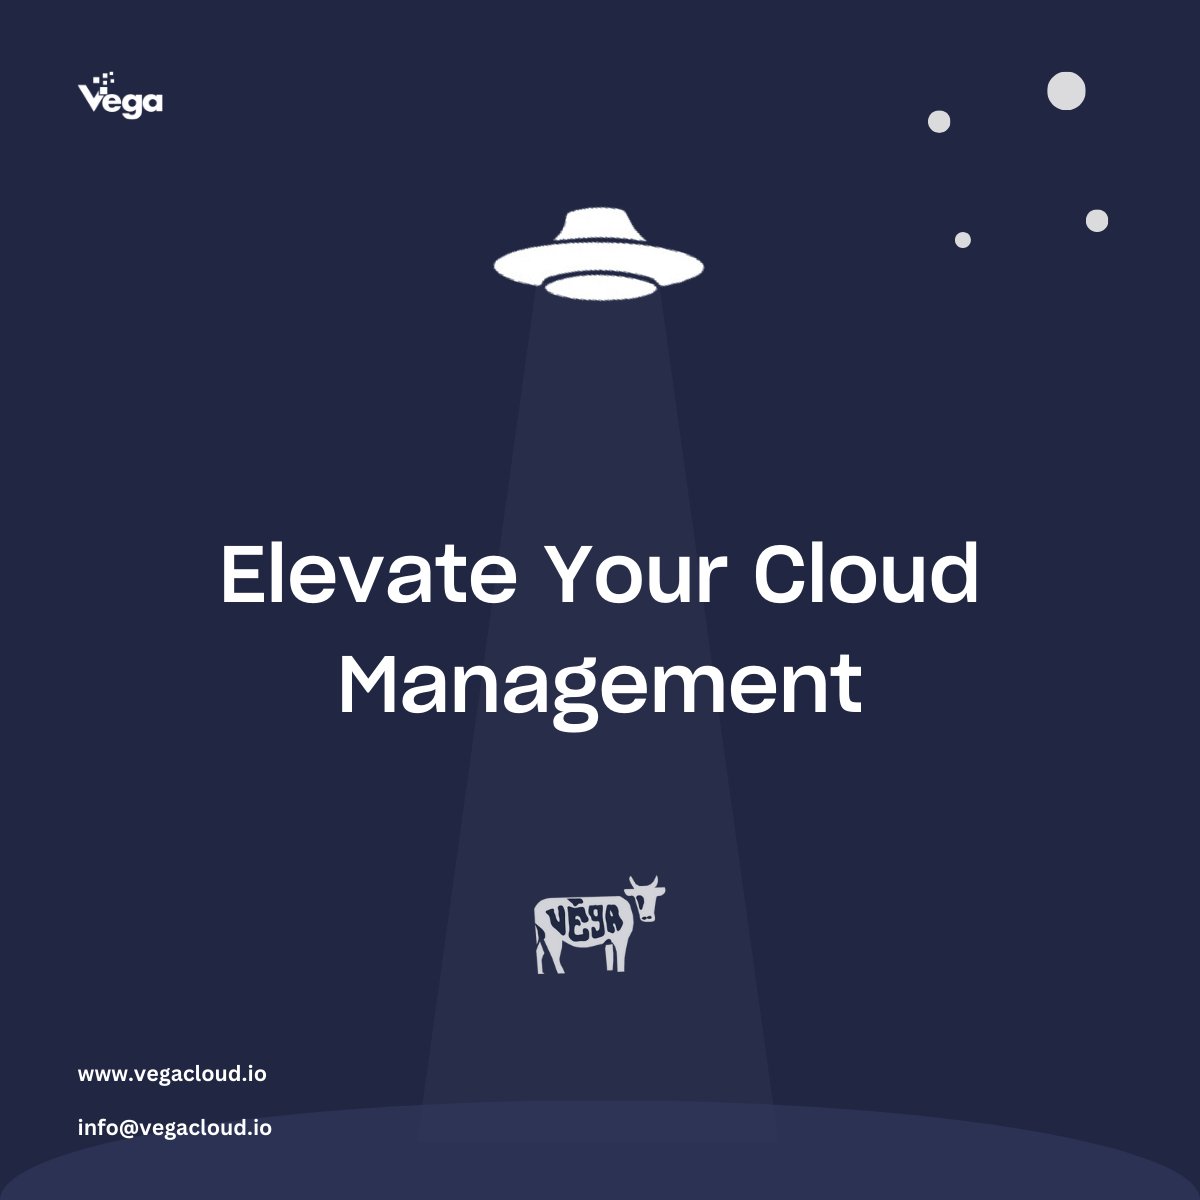 🛸 Light the way to stellar cloud management. #VegaCloud #NextLevelCloud